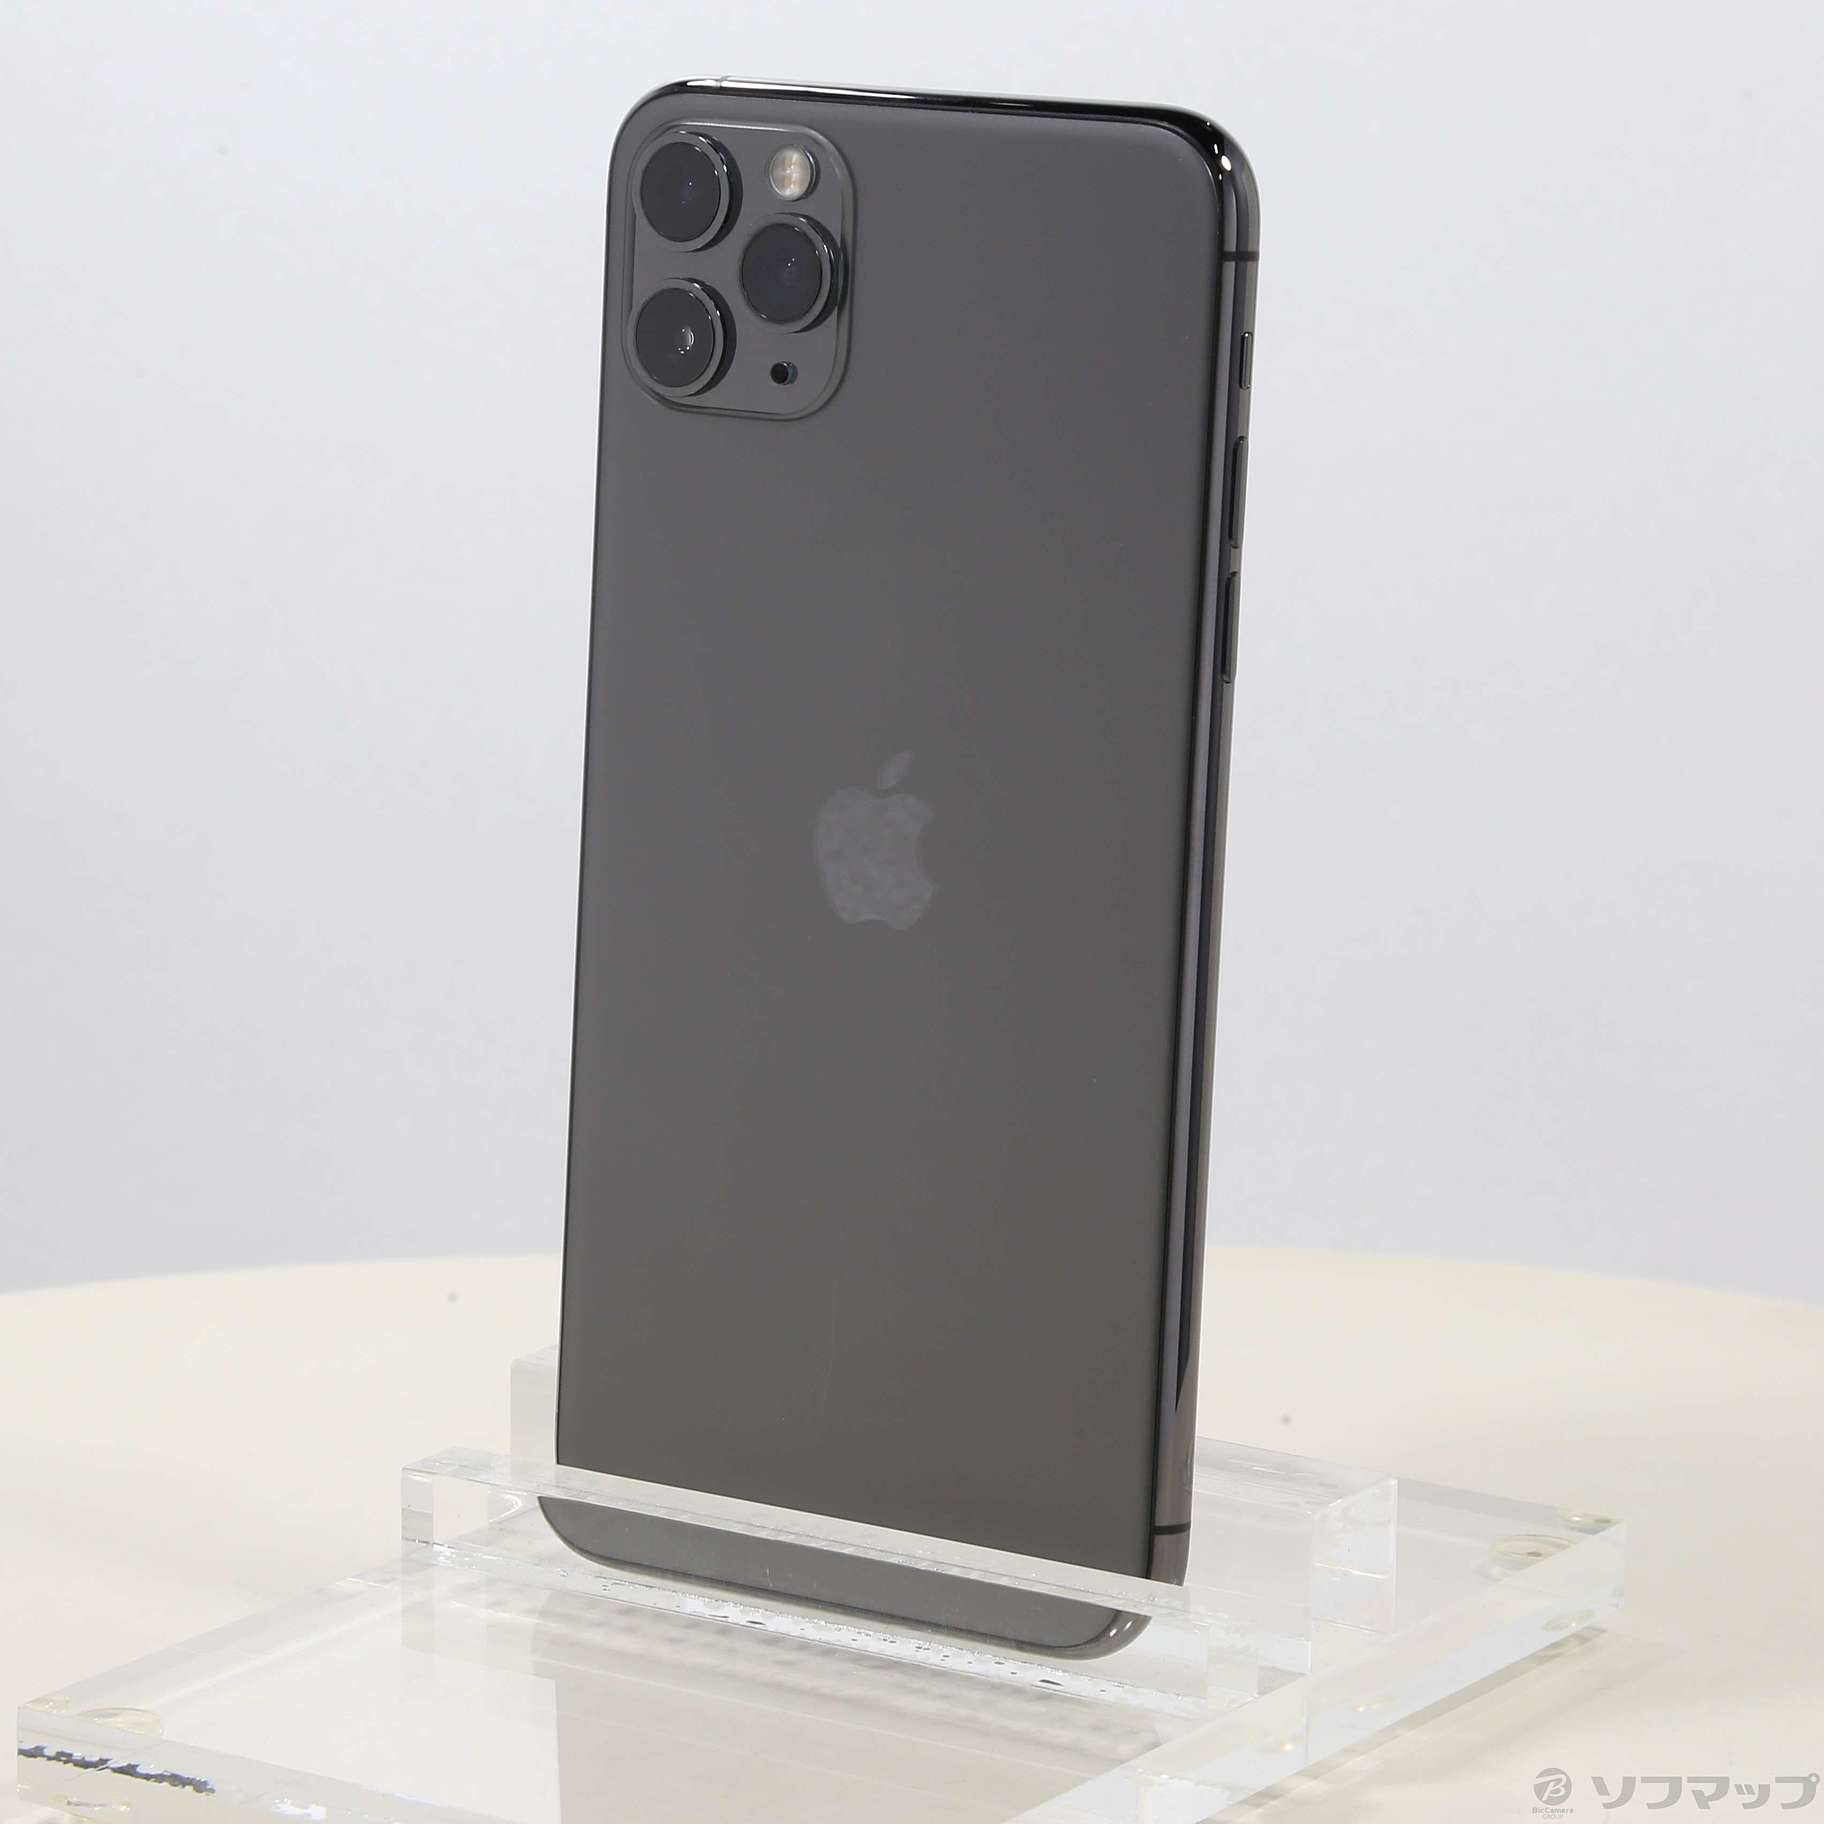 iPhone 11 Pro Max 256GB SIMフリー [スペースグレイ] 中古(白ロム)価格比較 - 価格.com